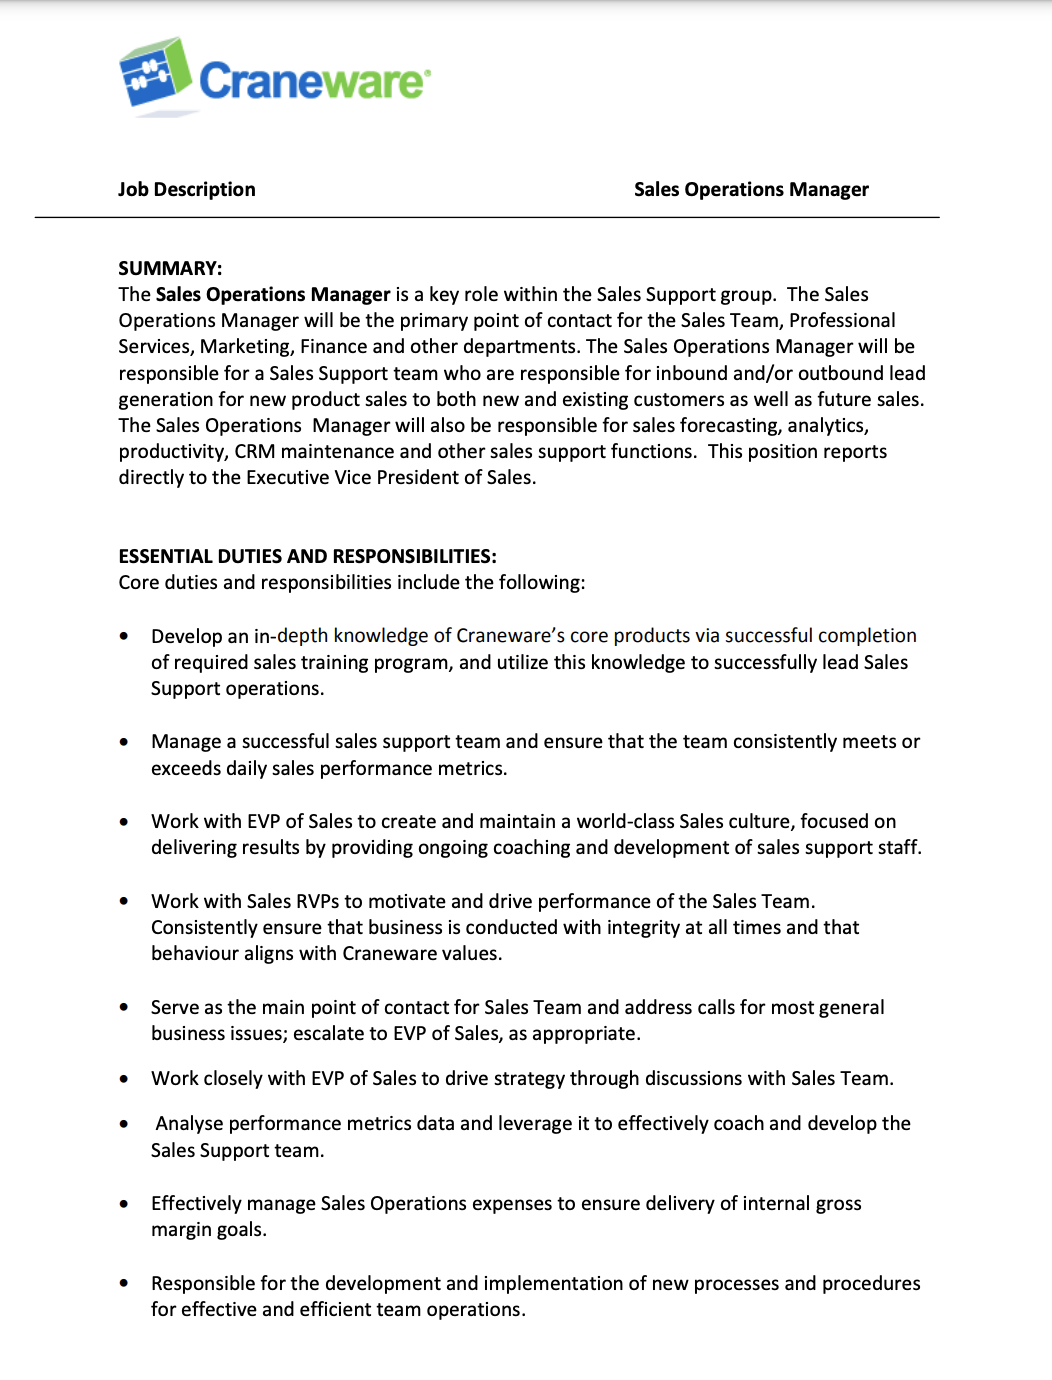 Sample Sales Operations Manager Job Description